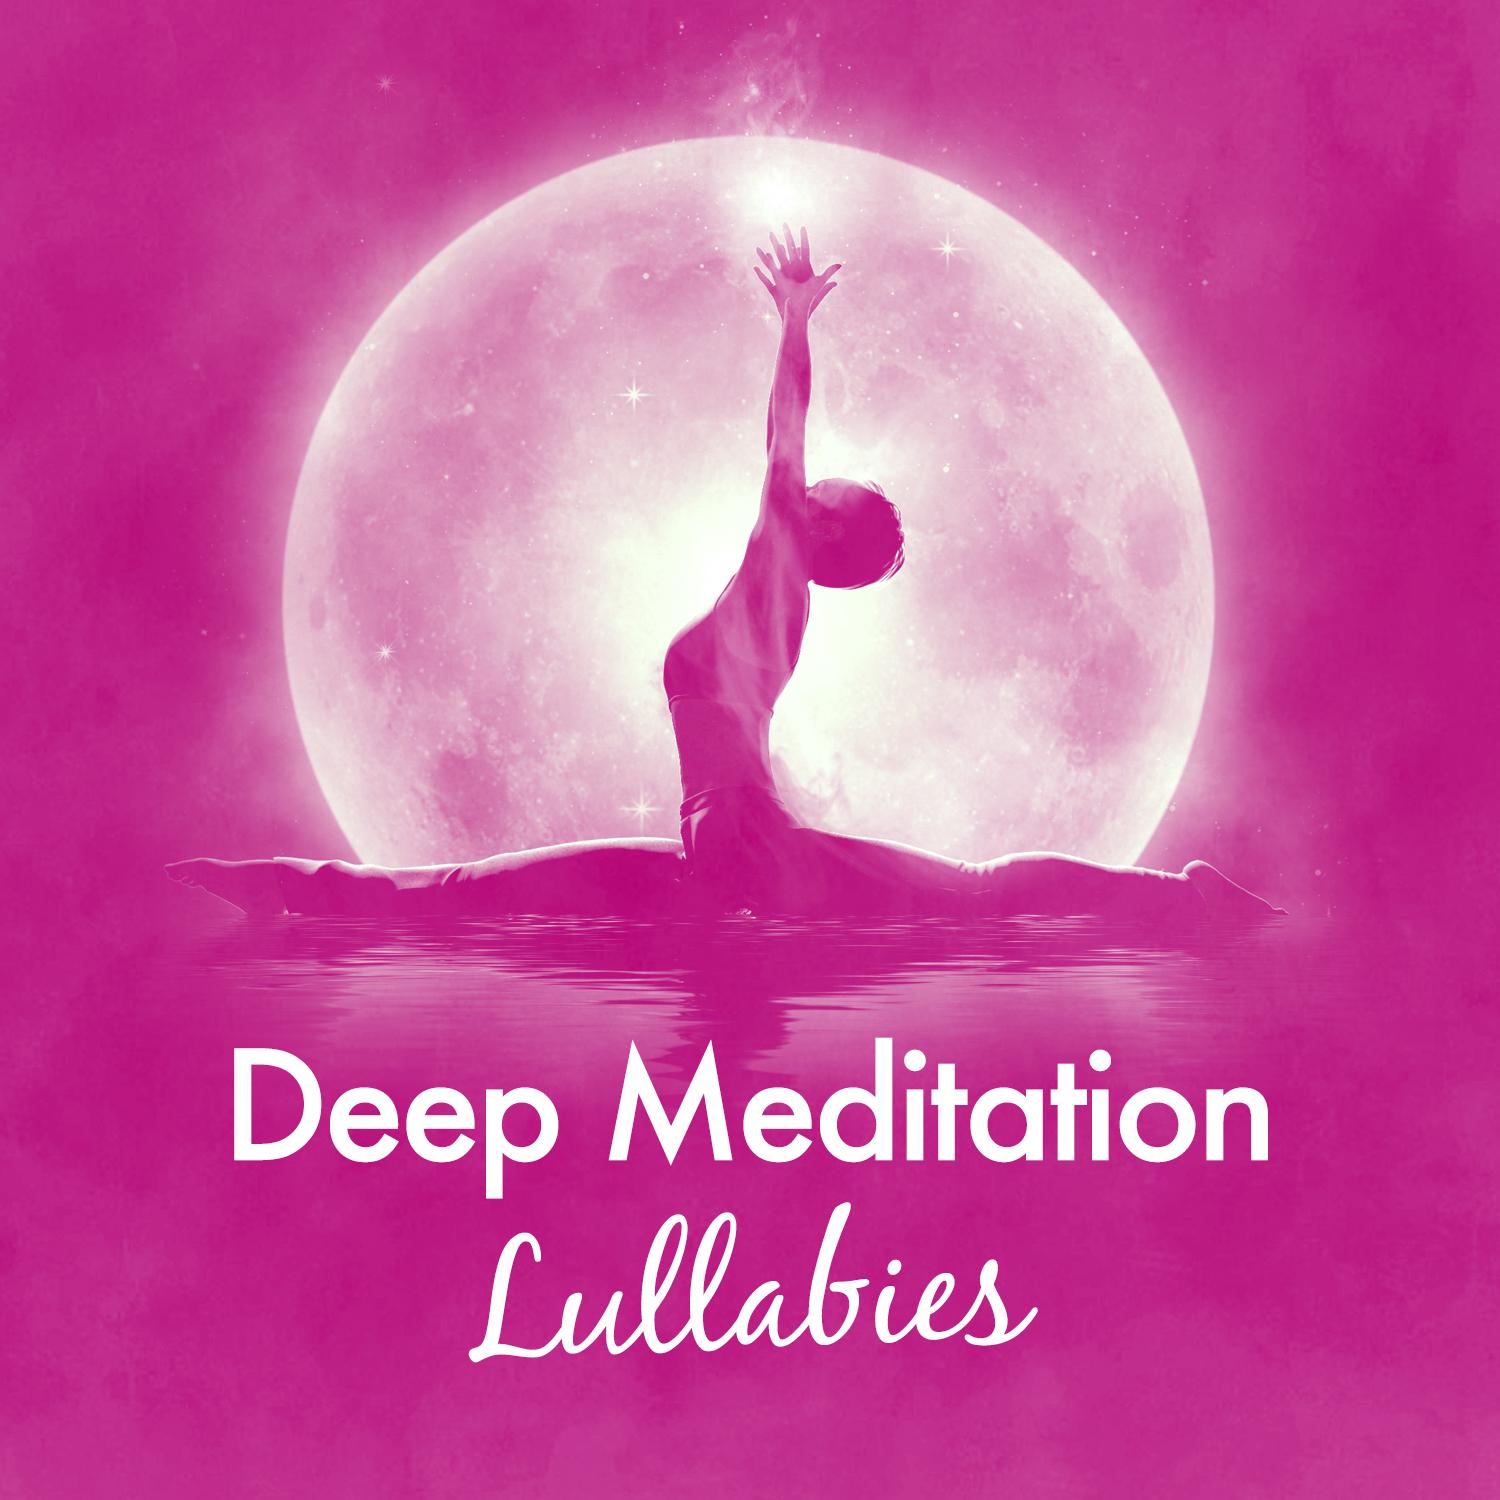 Deep Meditation Lullabies